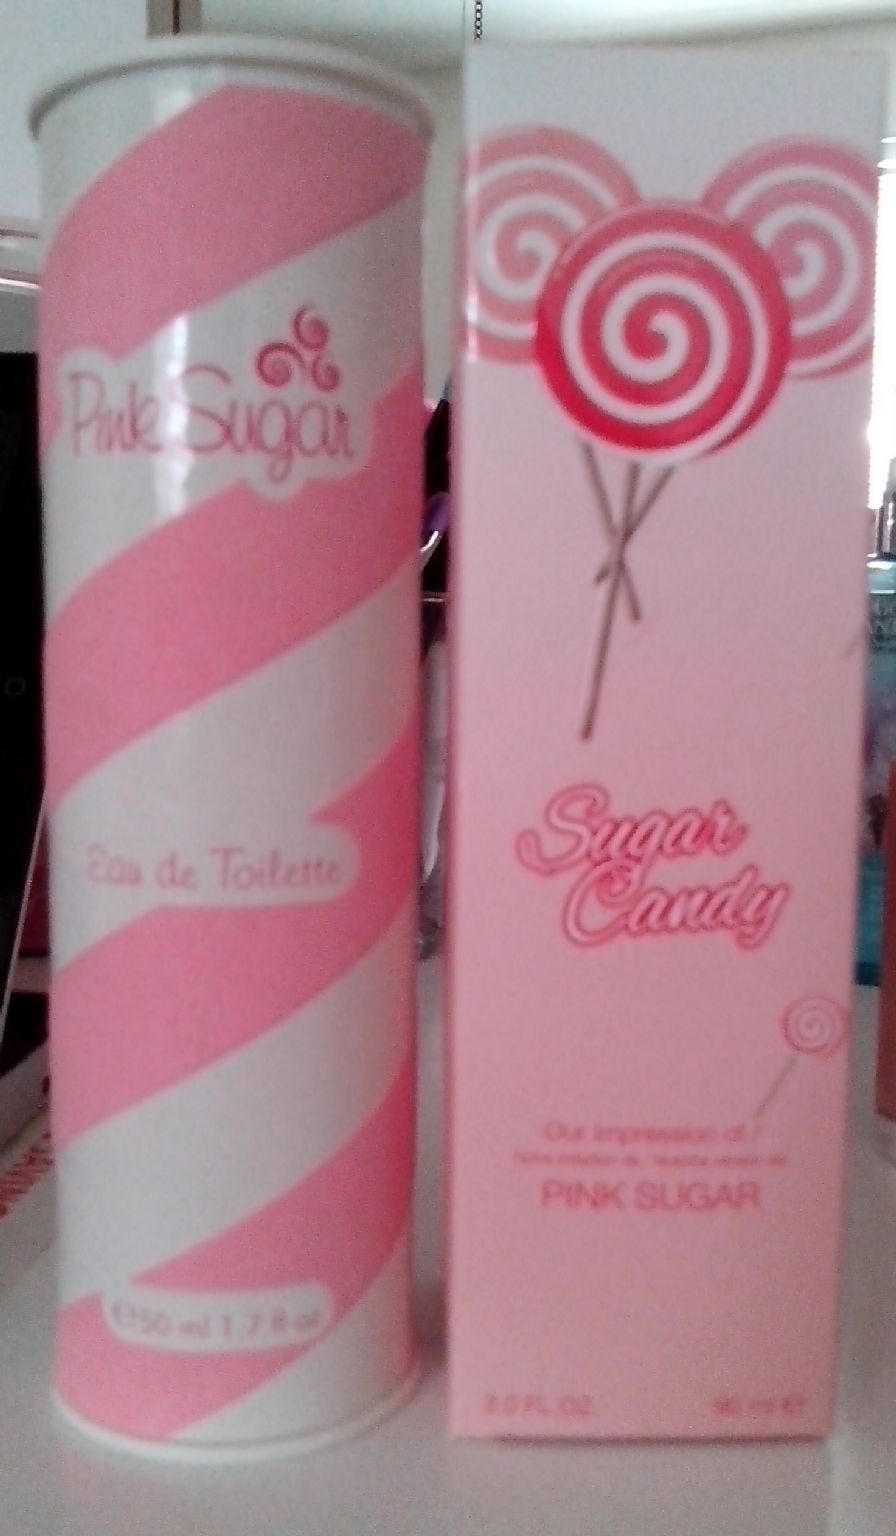 sugar candy perfume